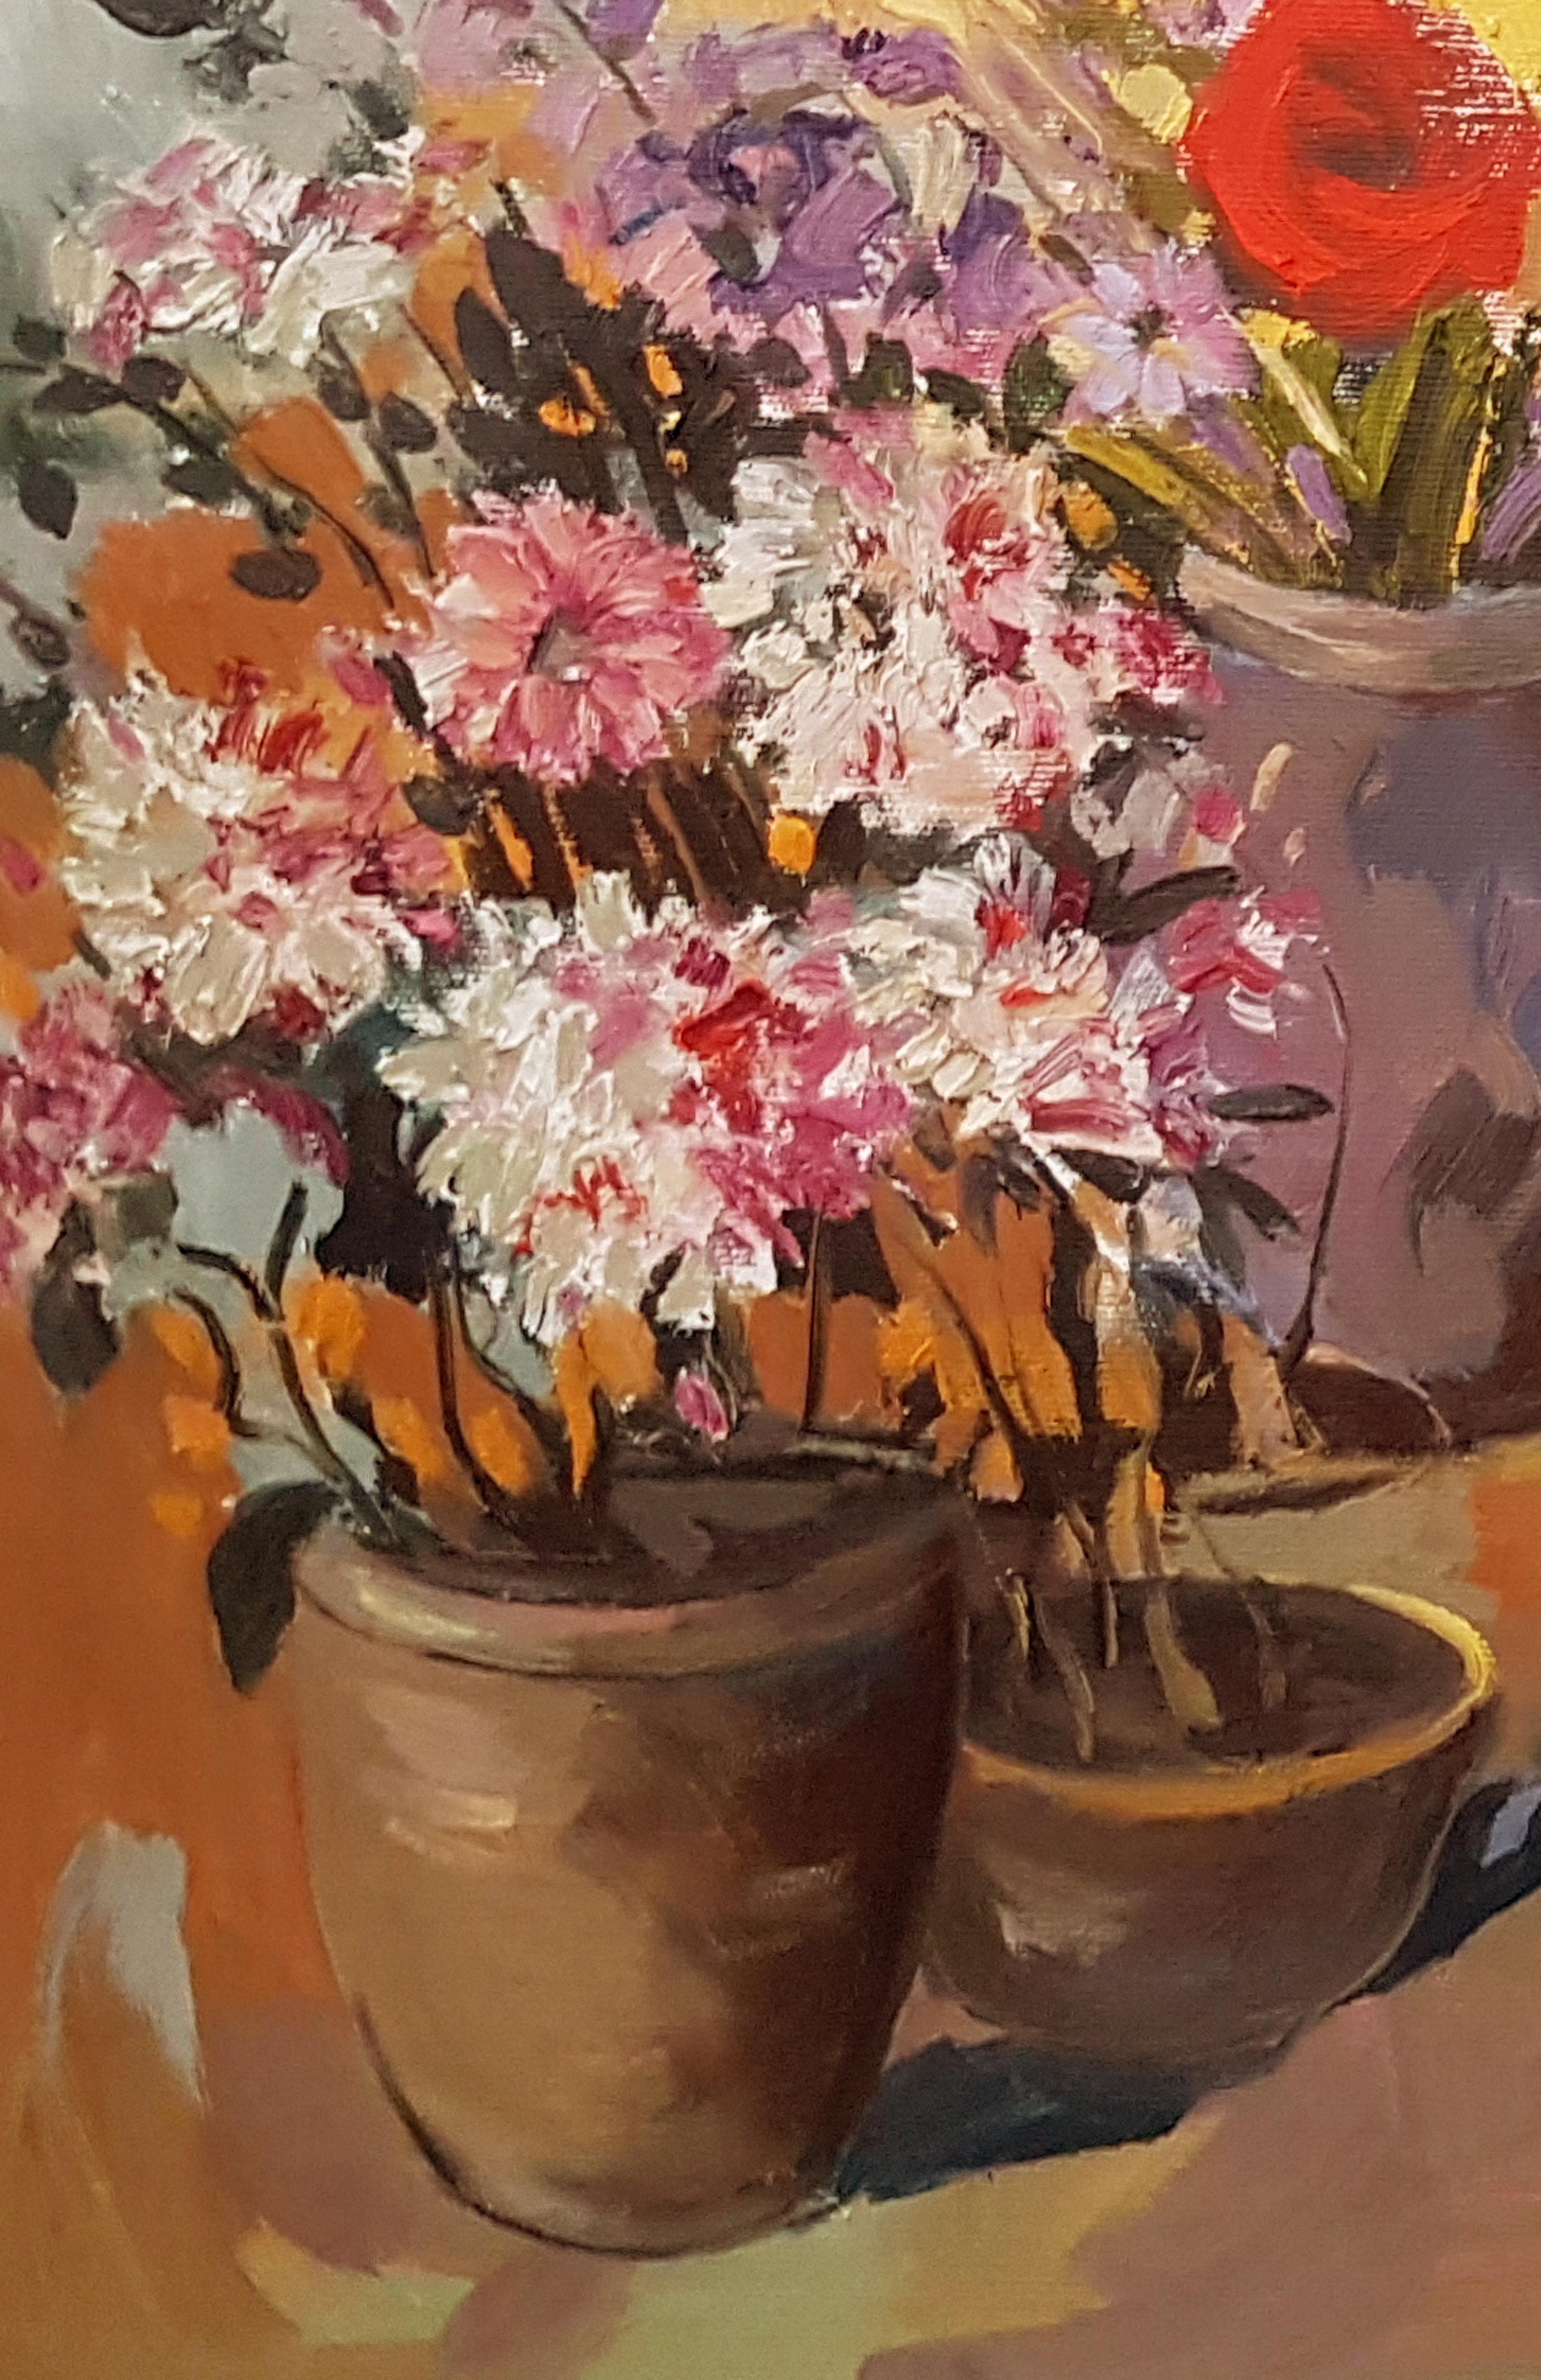 Artist: Ara H. Hakobyan
Work: Original Oil Painting, Handmade Artwork, One of a Kind
Medium: Acrylic on Canvas
Year: 2019
Style: Impressionism
Title: Symphony of Flowers
Size: 24